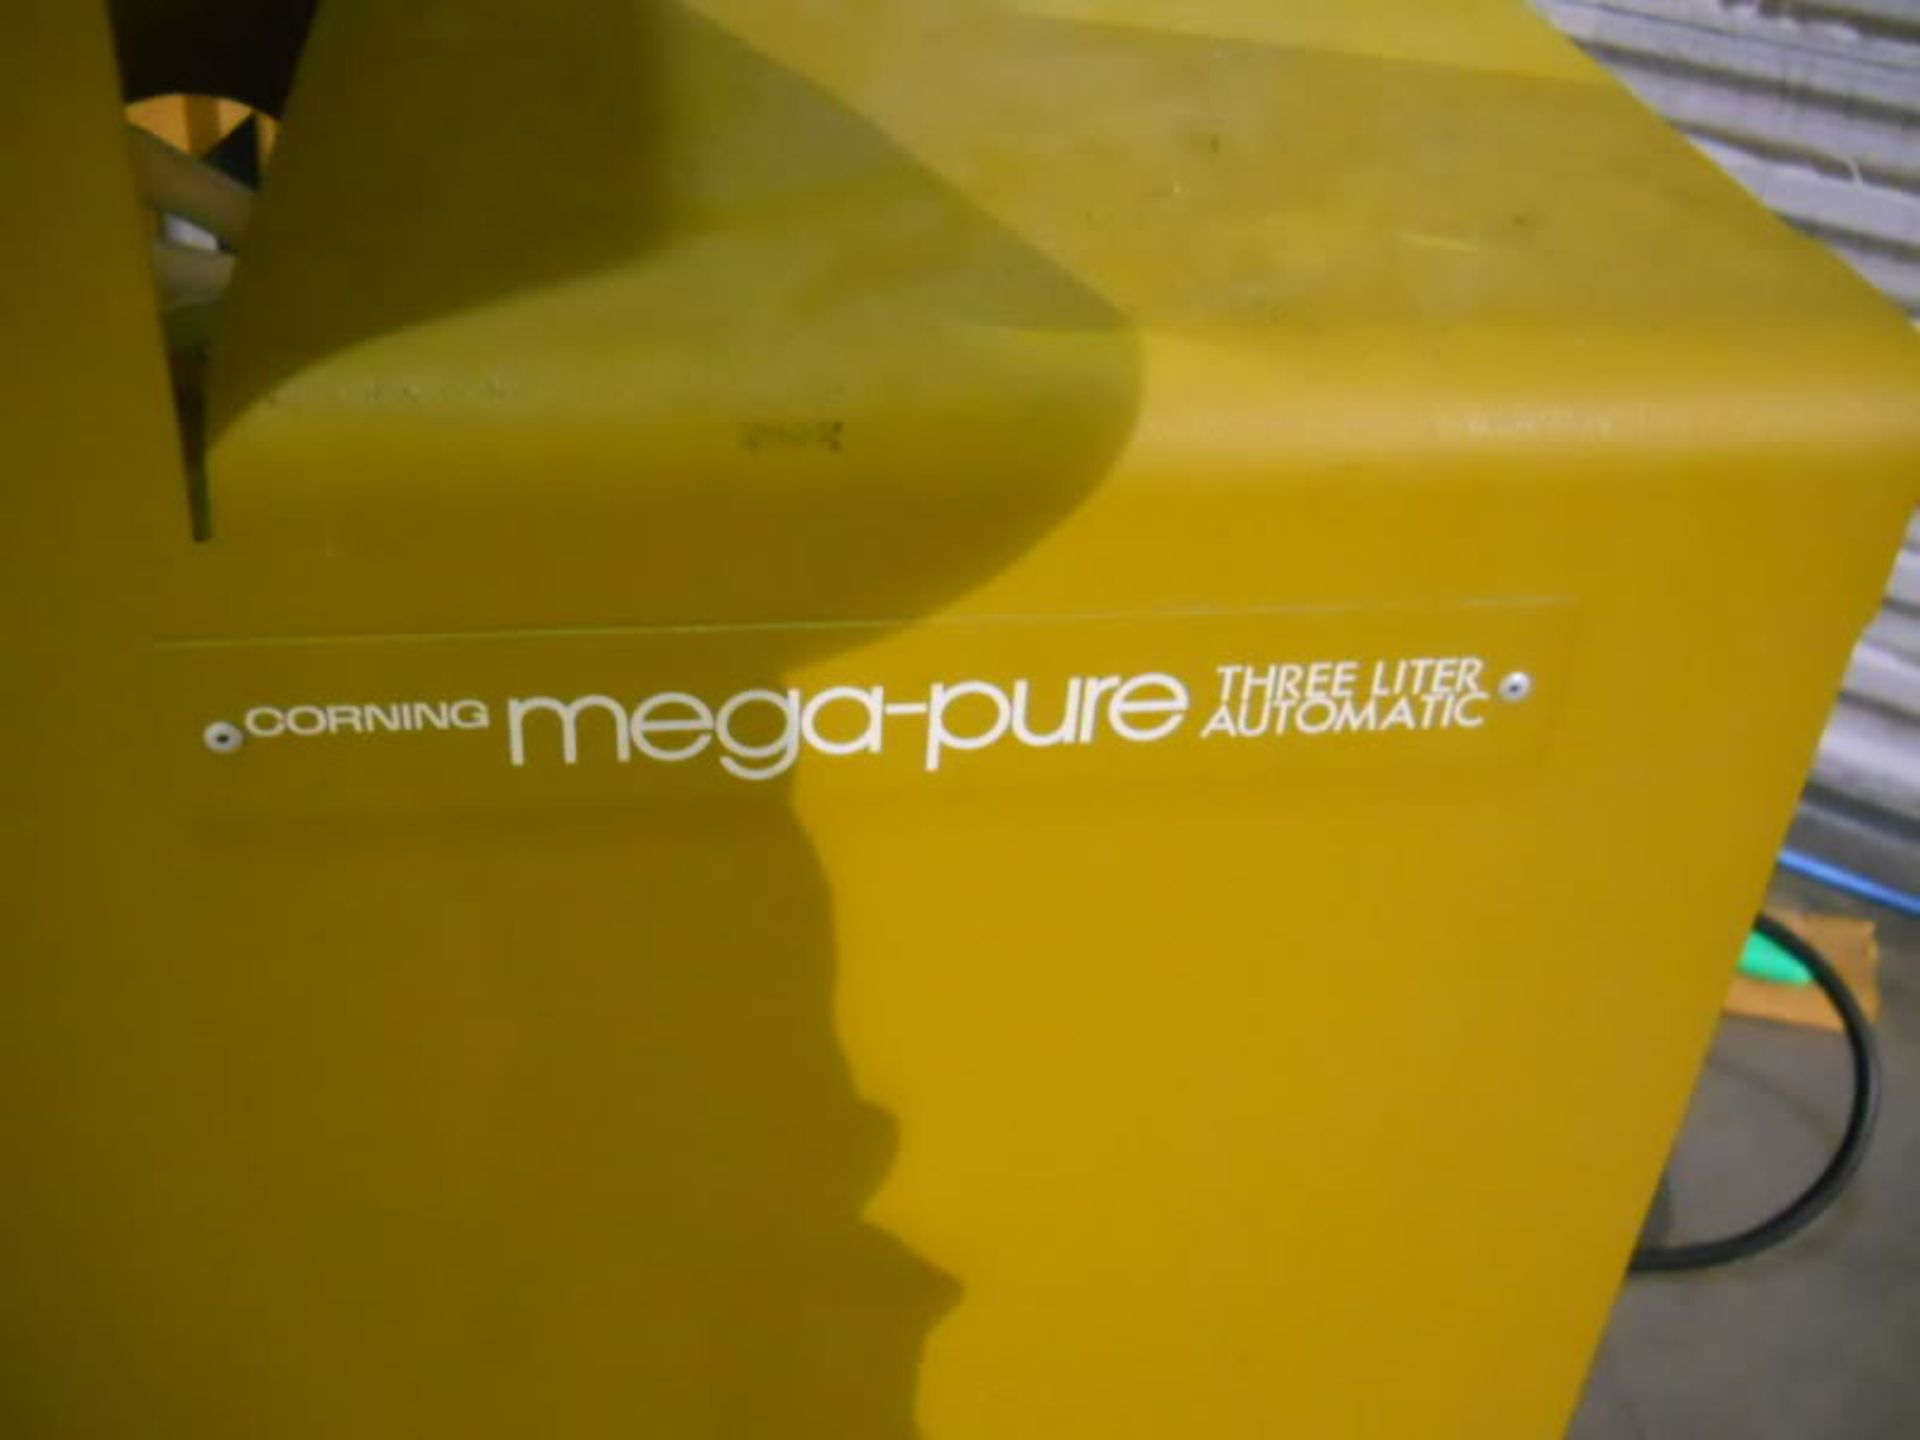 Corning Mega-Pure 3 Liter Automatic Water Still, Qty 1, 221501268021 - Image 2 of 12